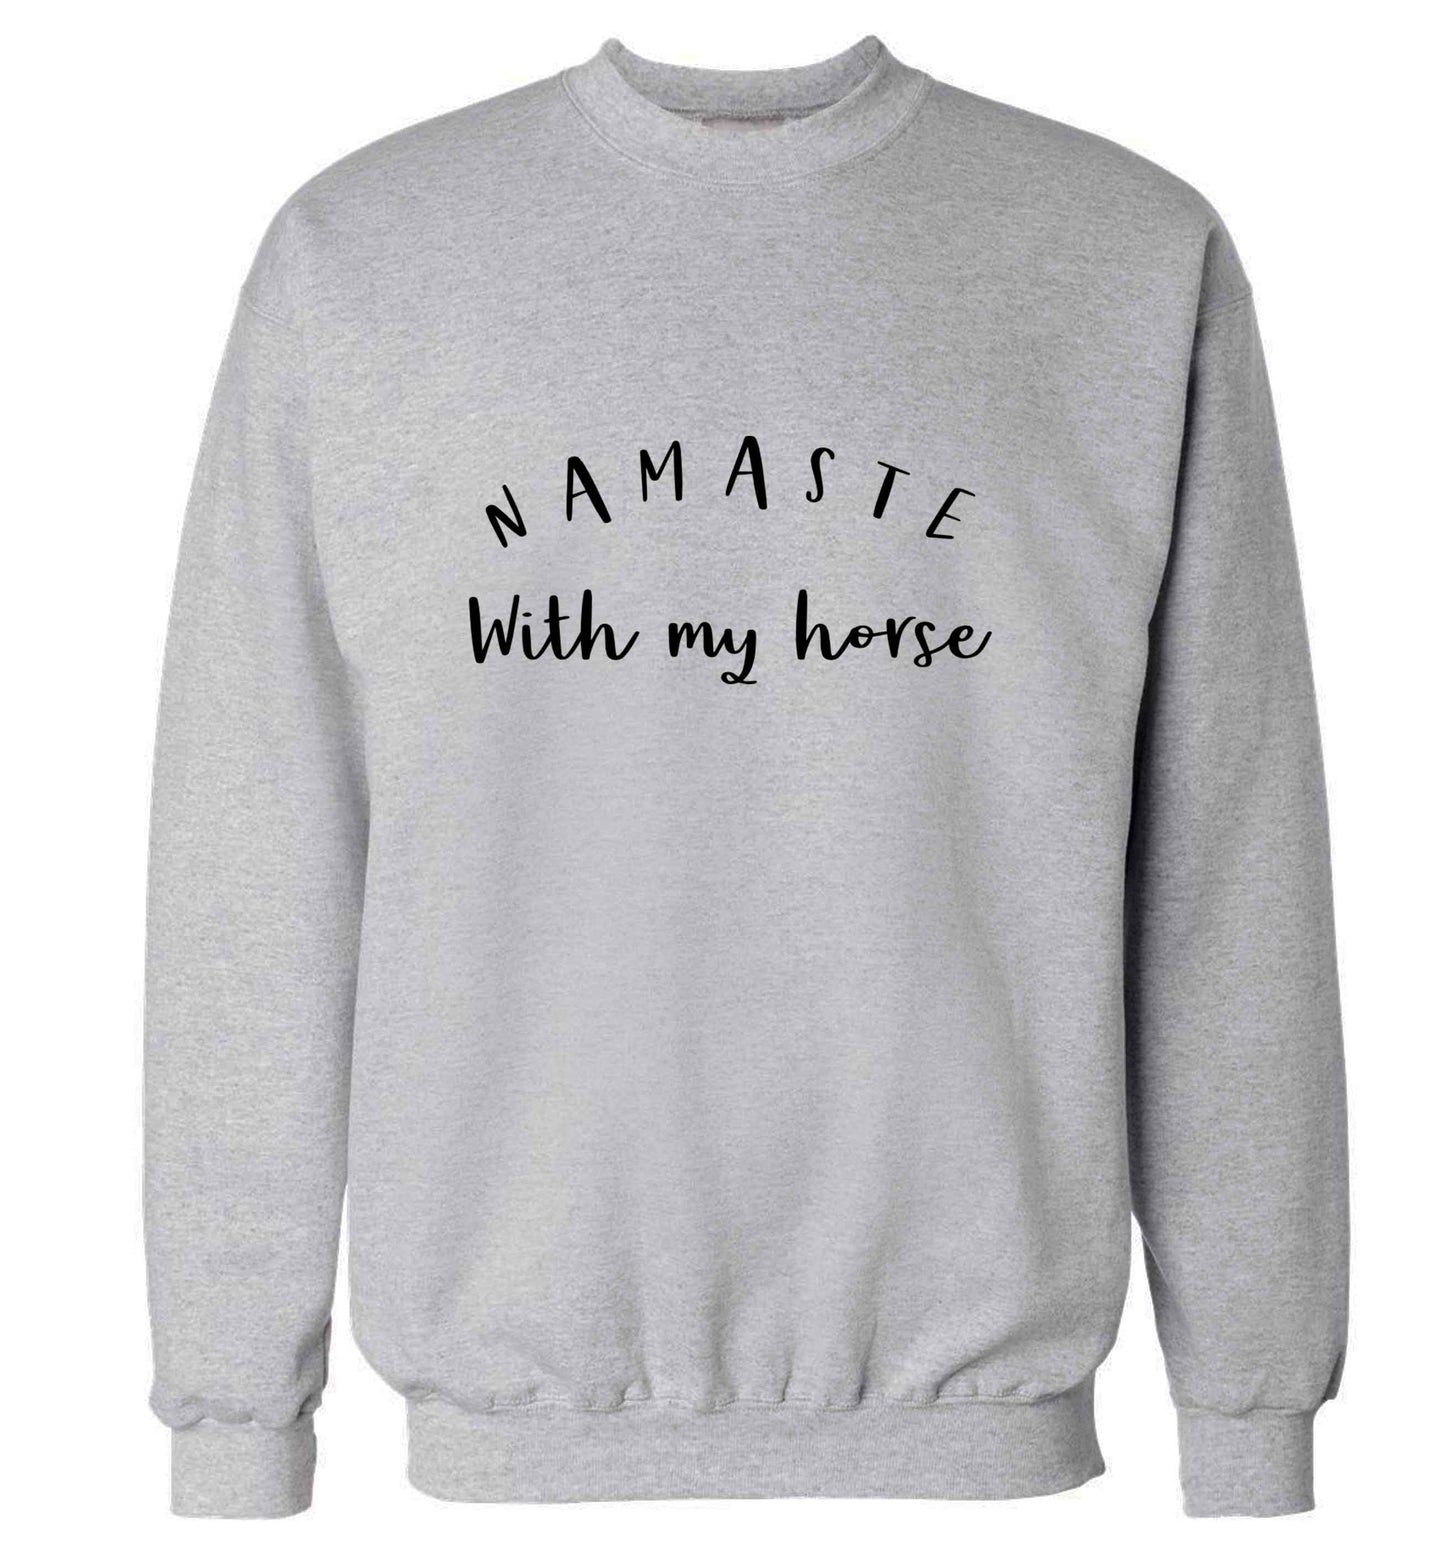 Namaste with my horse adult's unisex grey sweater 2XL